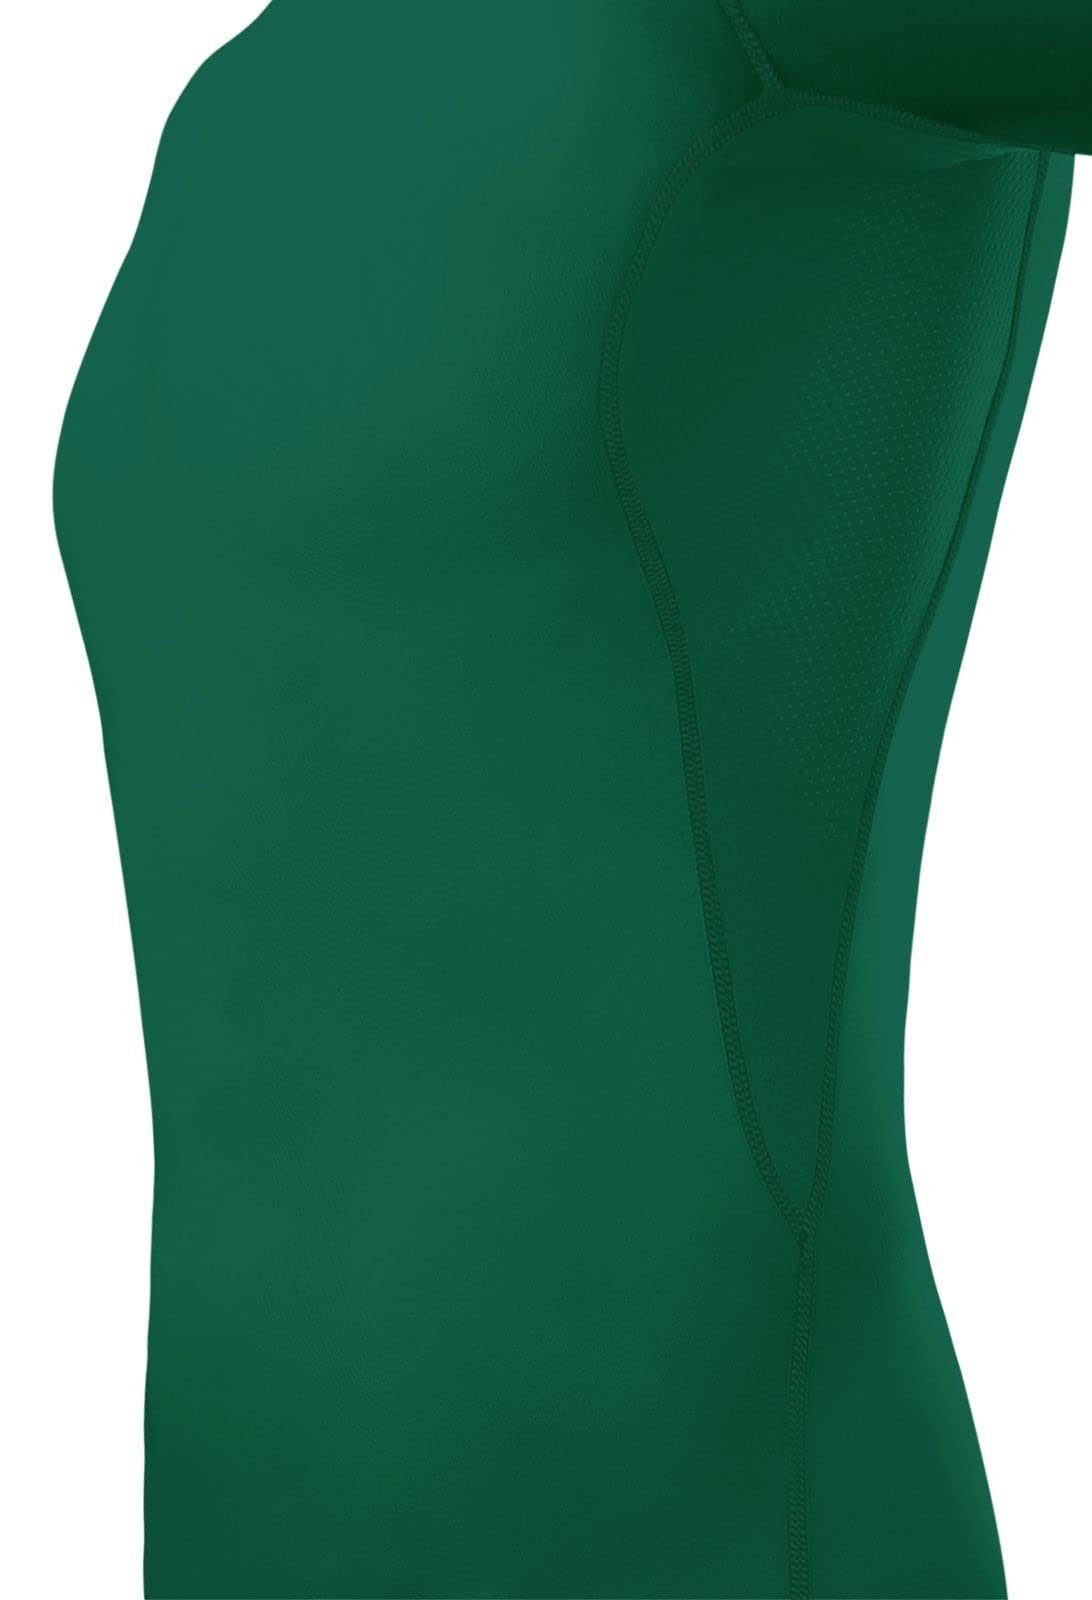 - TCA Funktionsunterhemd elastisch Grün TCA HyperFusion Herren Sportshirt, kurzärmlig,